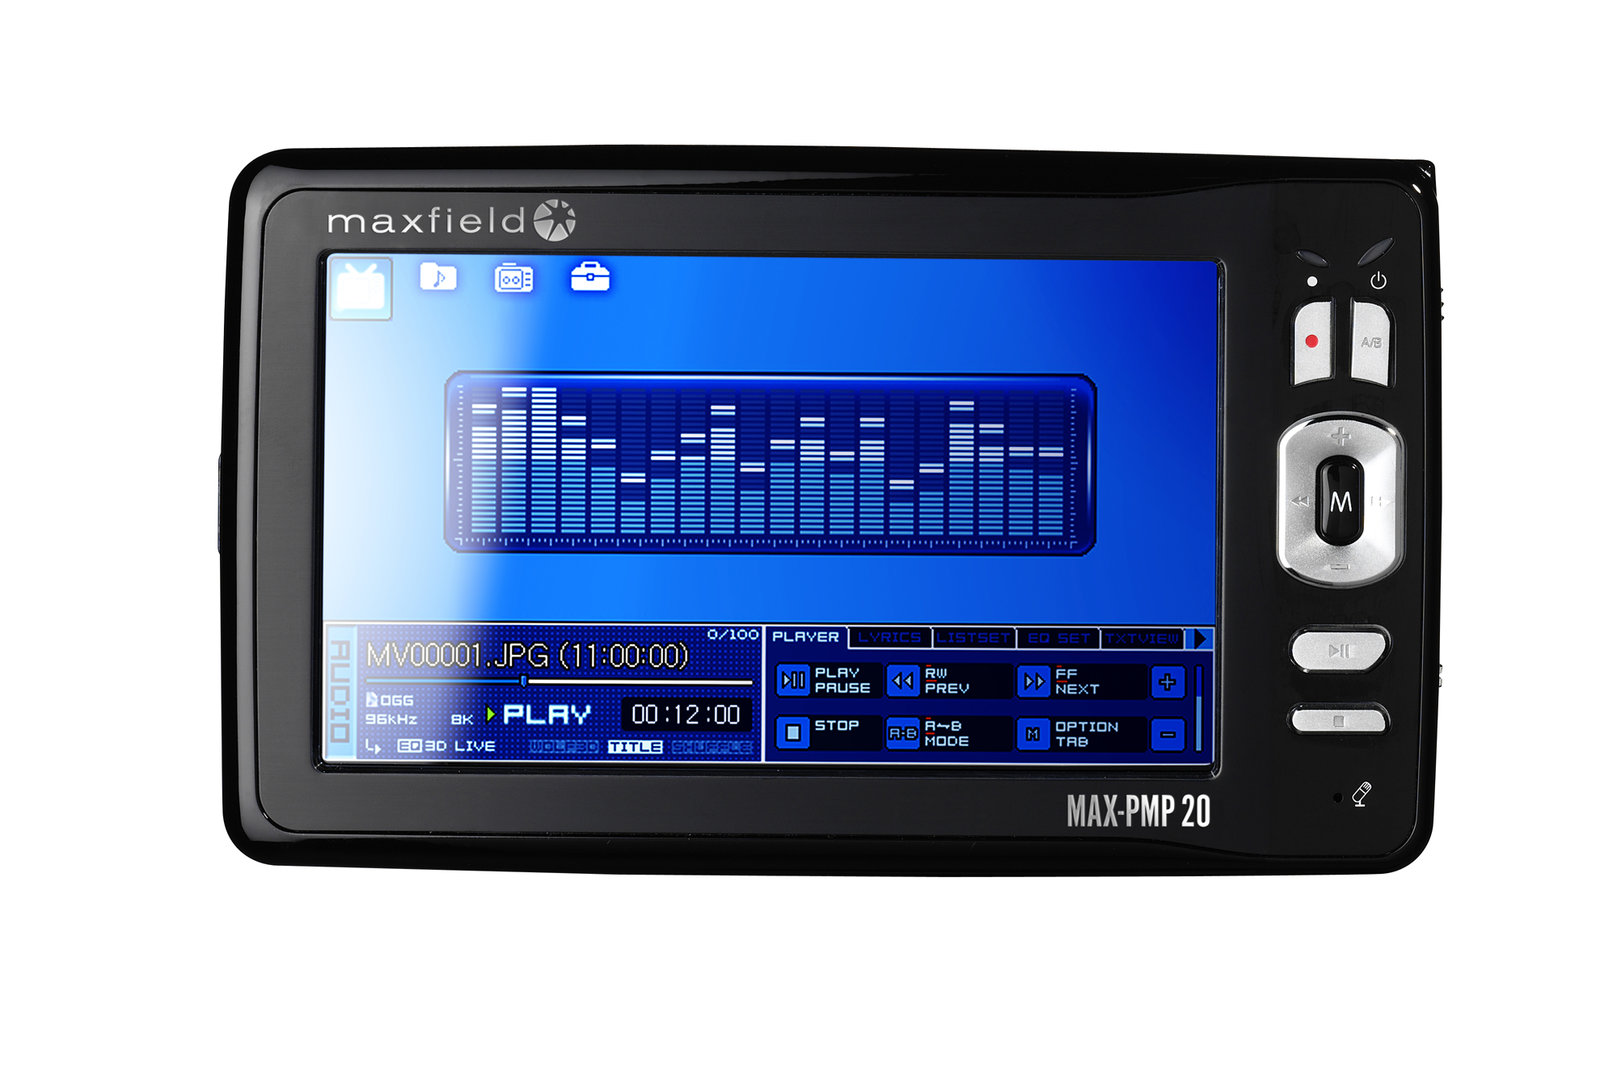 Maxfield MAX-PMP 20